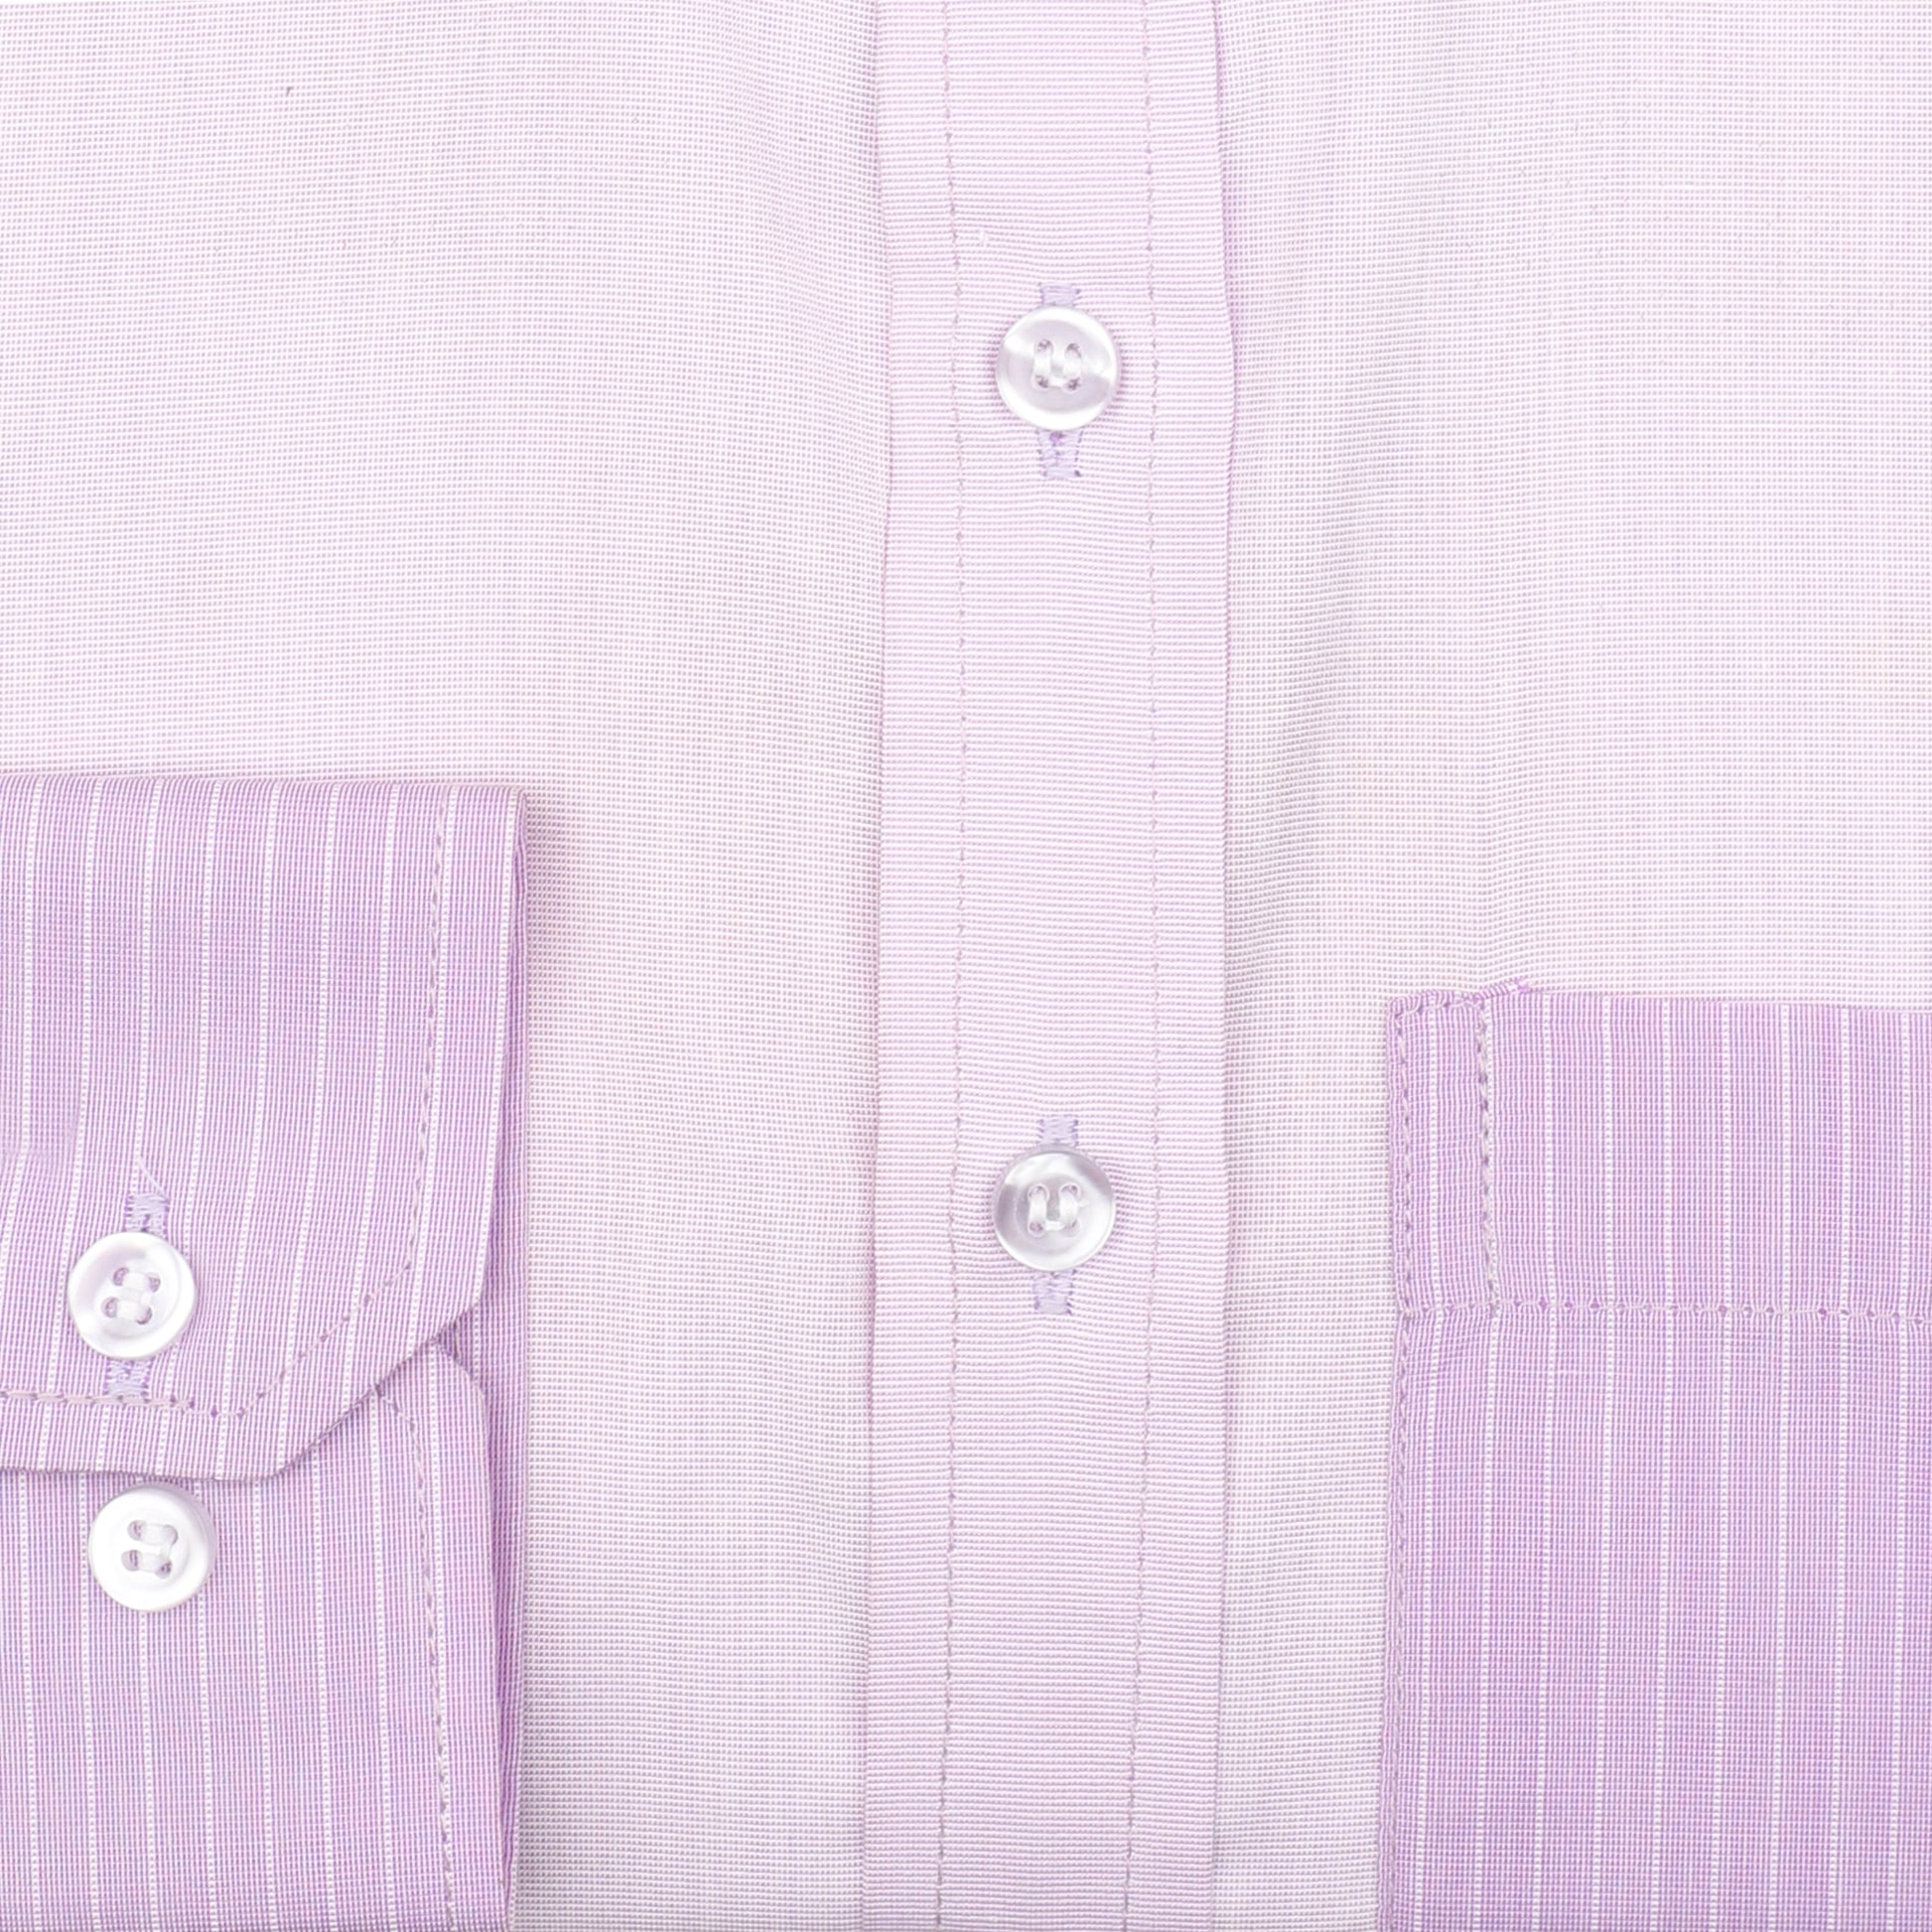 Sophisticated Men's Purple Checkered Shirt